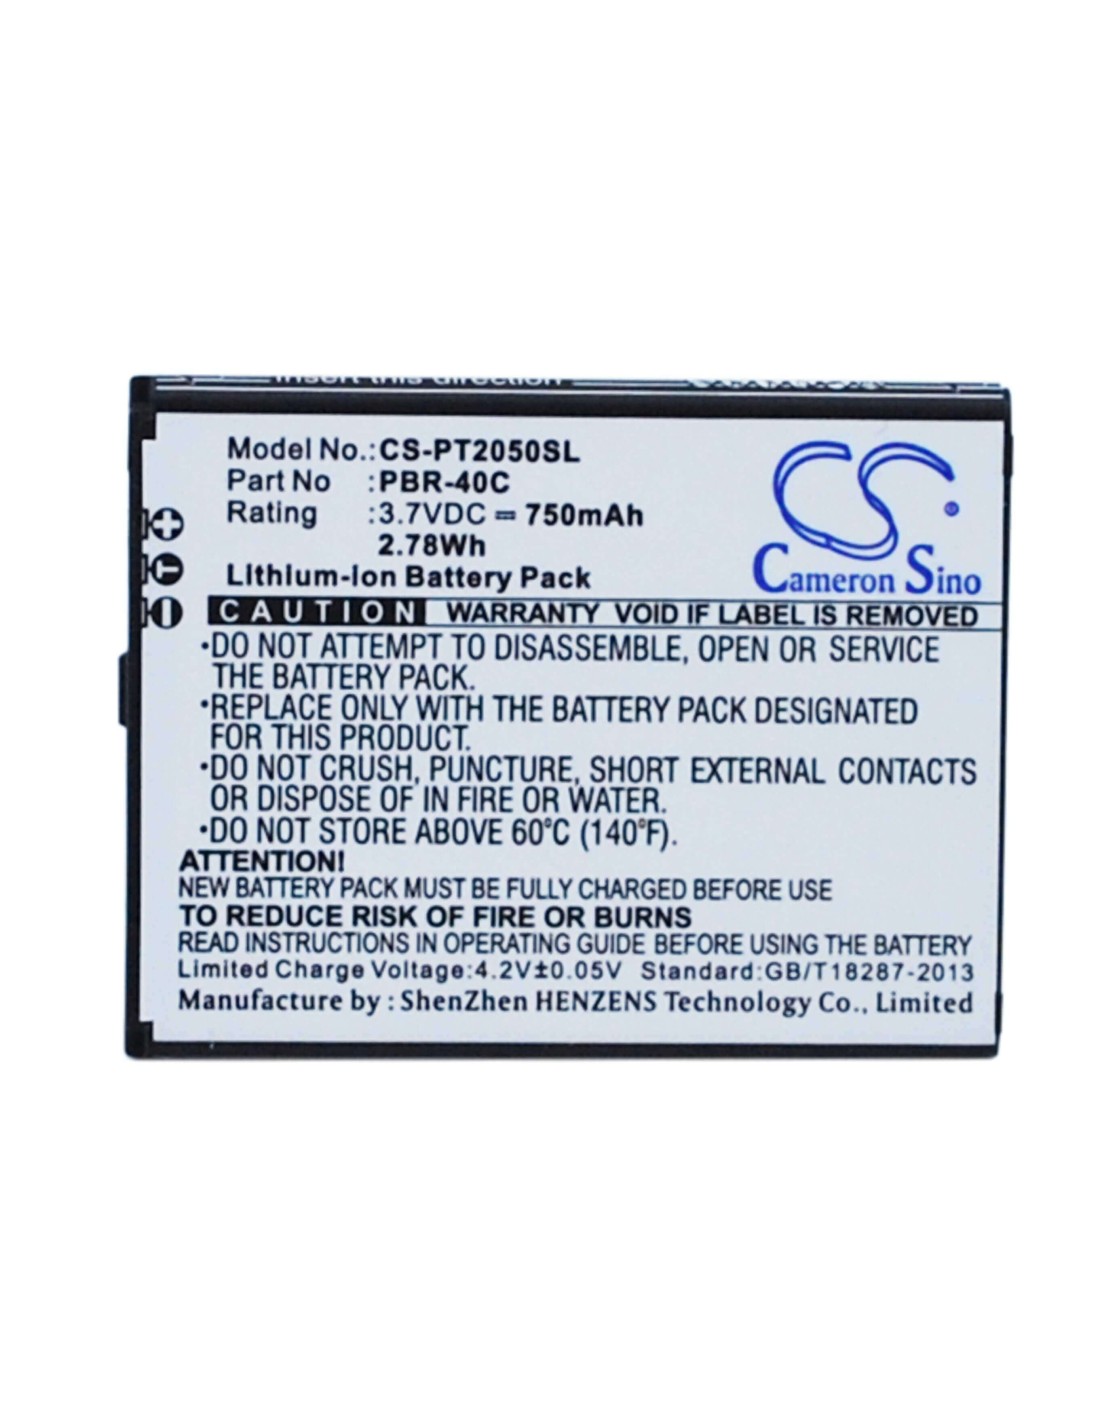 Battery for Pantech Breeze IV, Breeze 4, P2050 3.7V, 750mAh - 2.78Wh